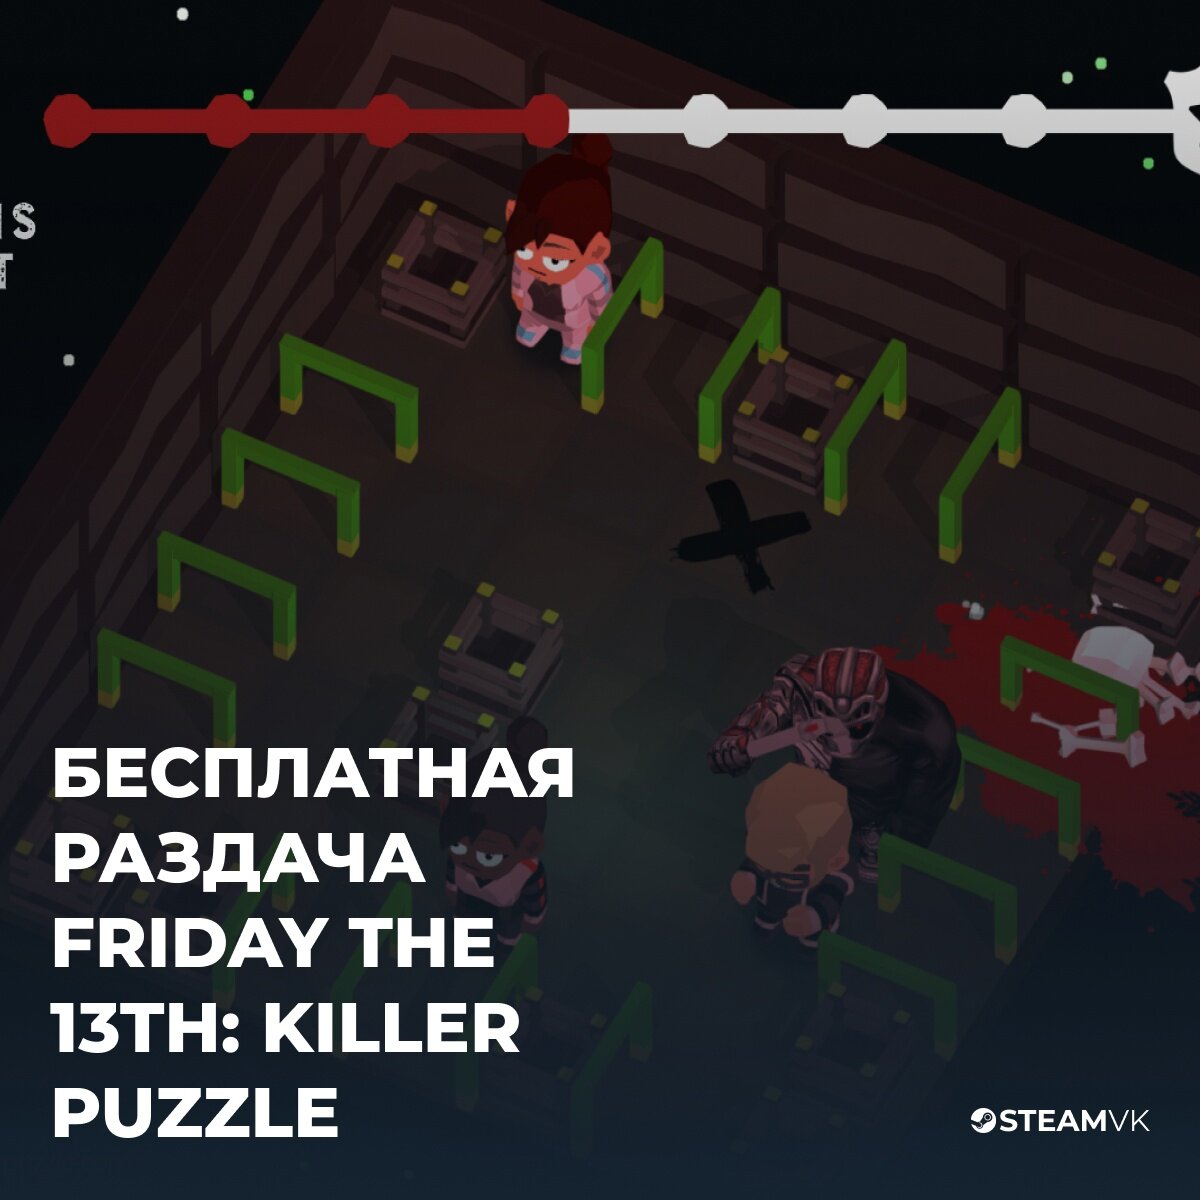 Friday the 13th: Killer Puzzle de graça corre lá. #steam #sexta #terro